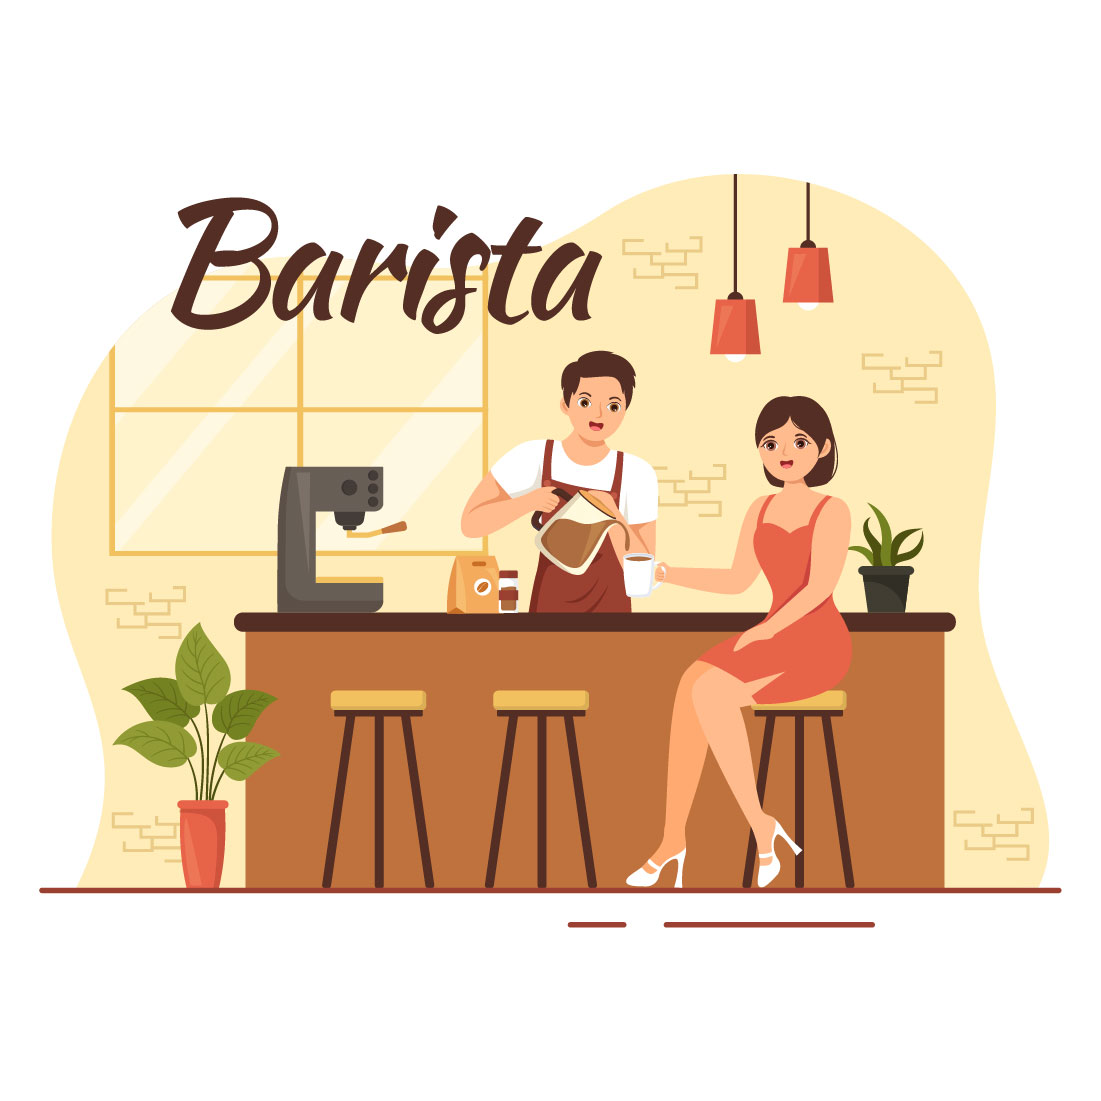 12 Barista Making Coffee Illustration cover image.